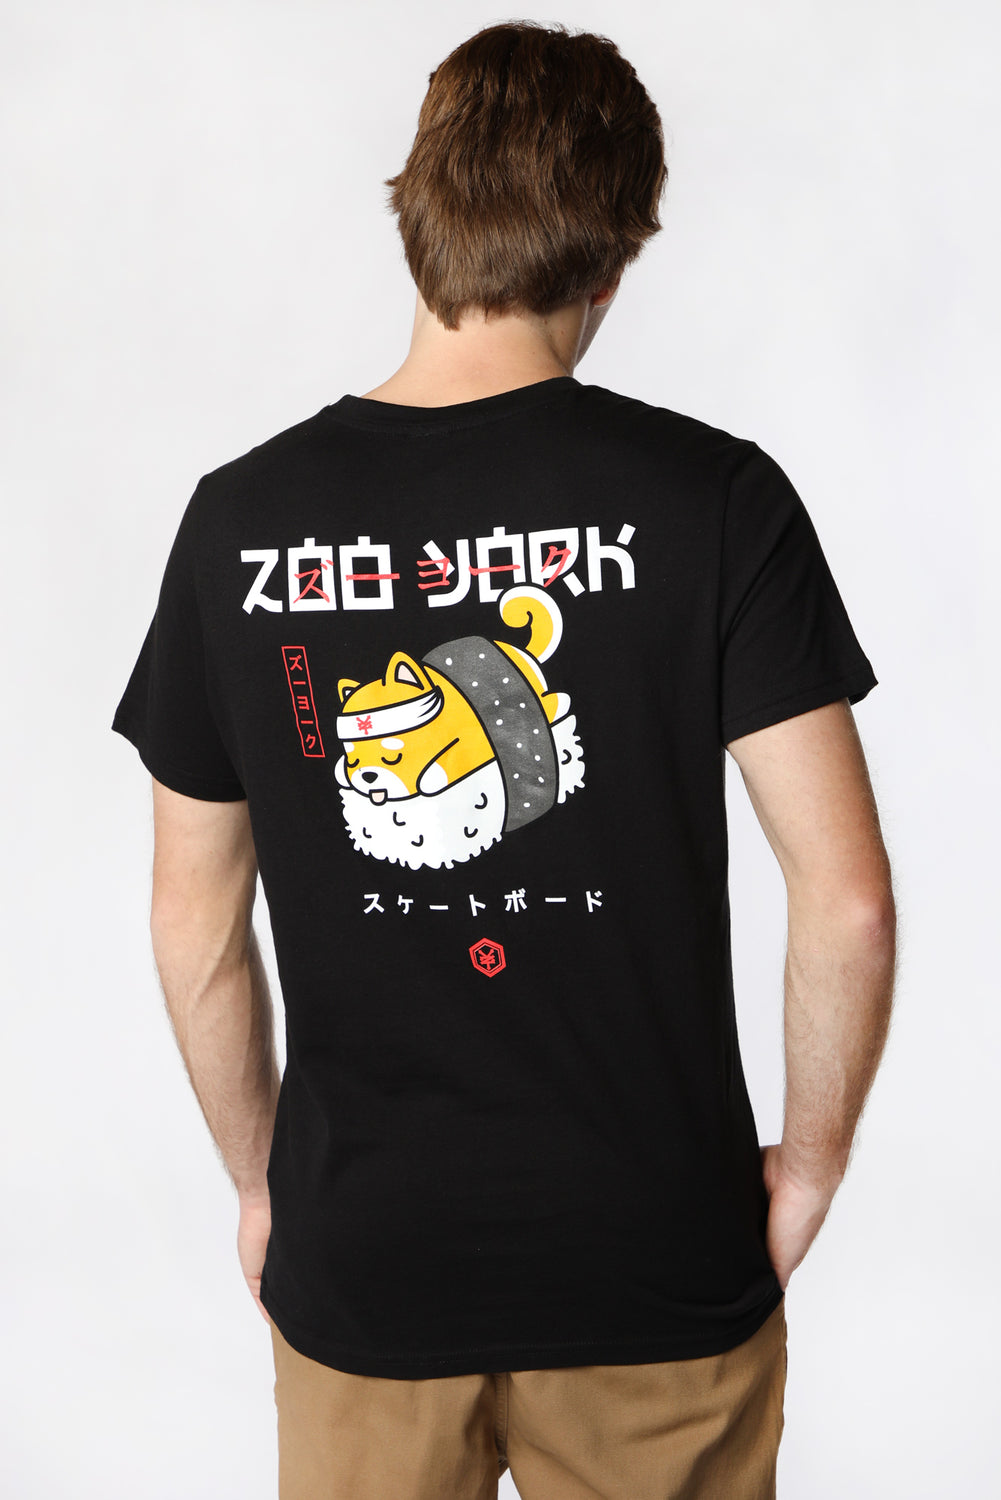 T-Shirt Imprimé Sushi Zoo York Homme T-Shirt Imprimé Sushi Zoo York Homme